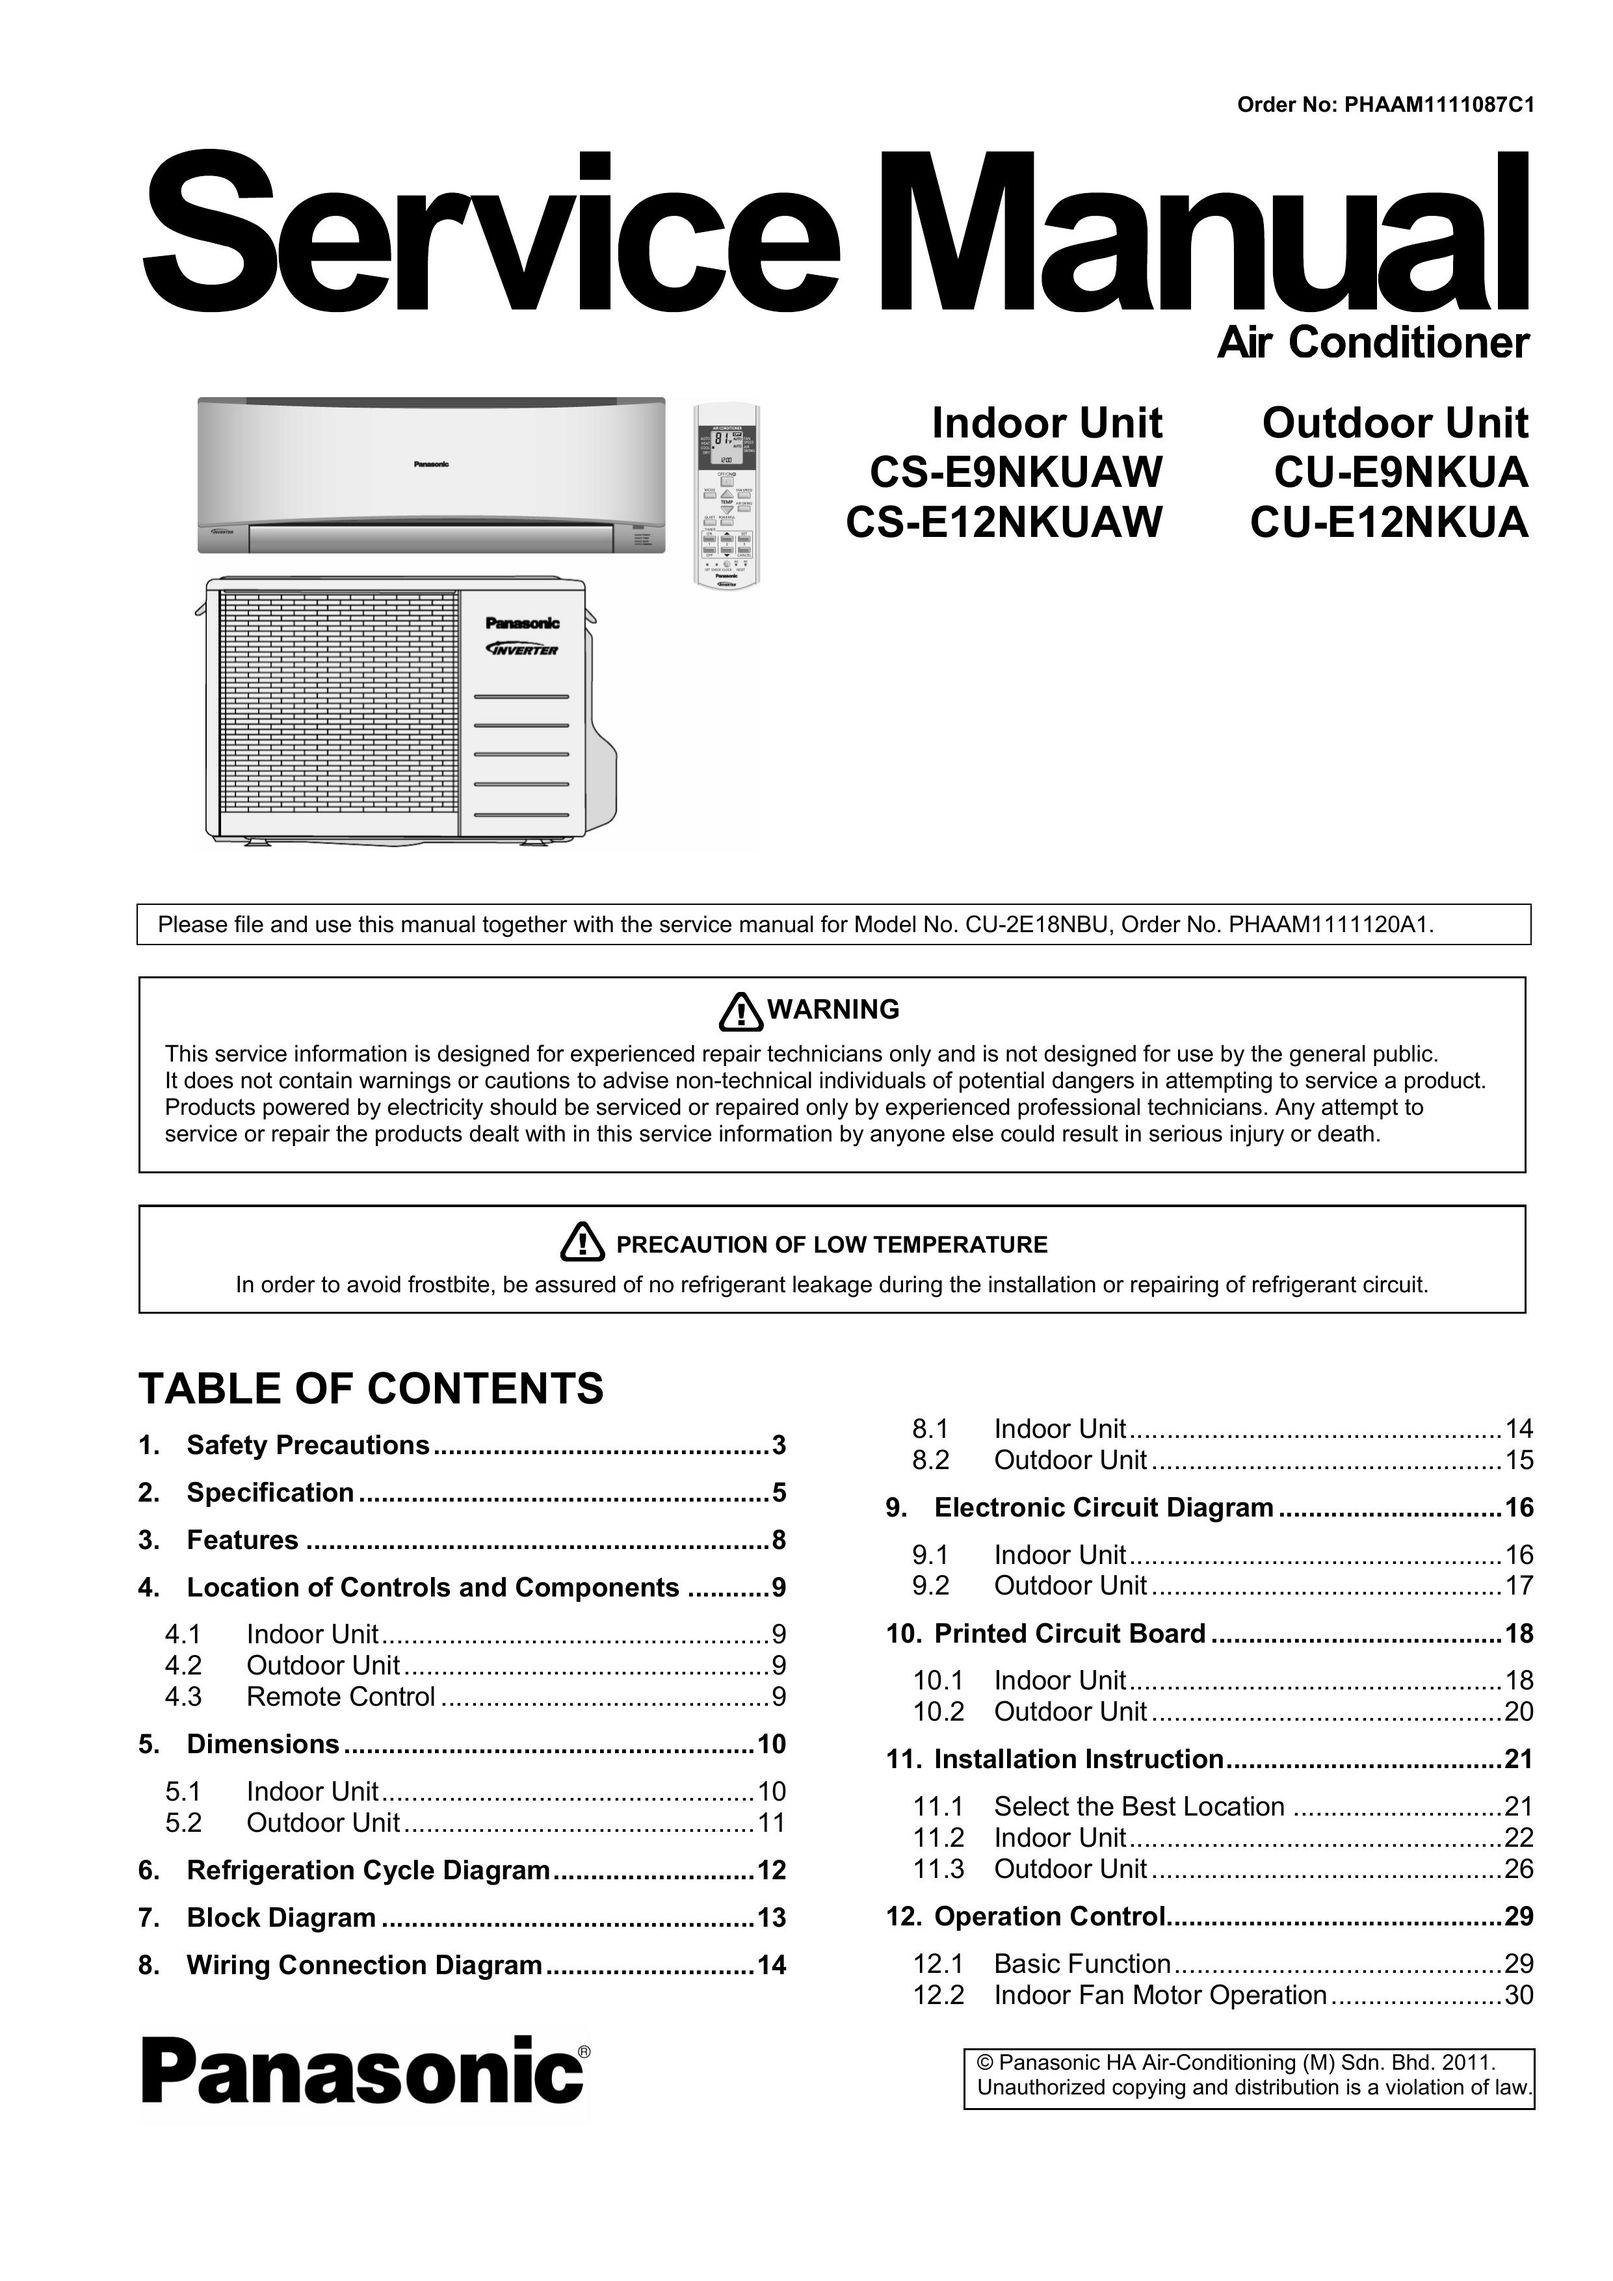 Panasonic CS-E12NKUAW Air Conditioner User Manual